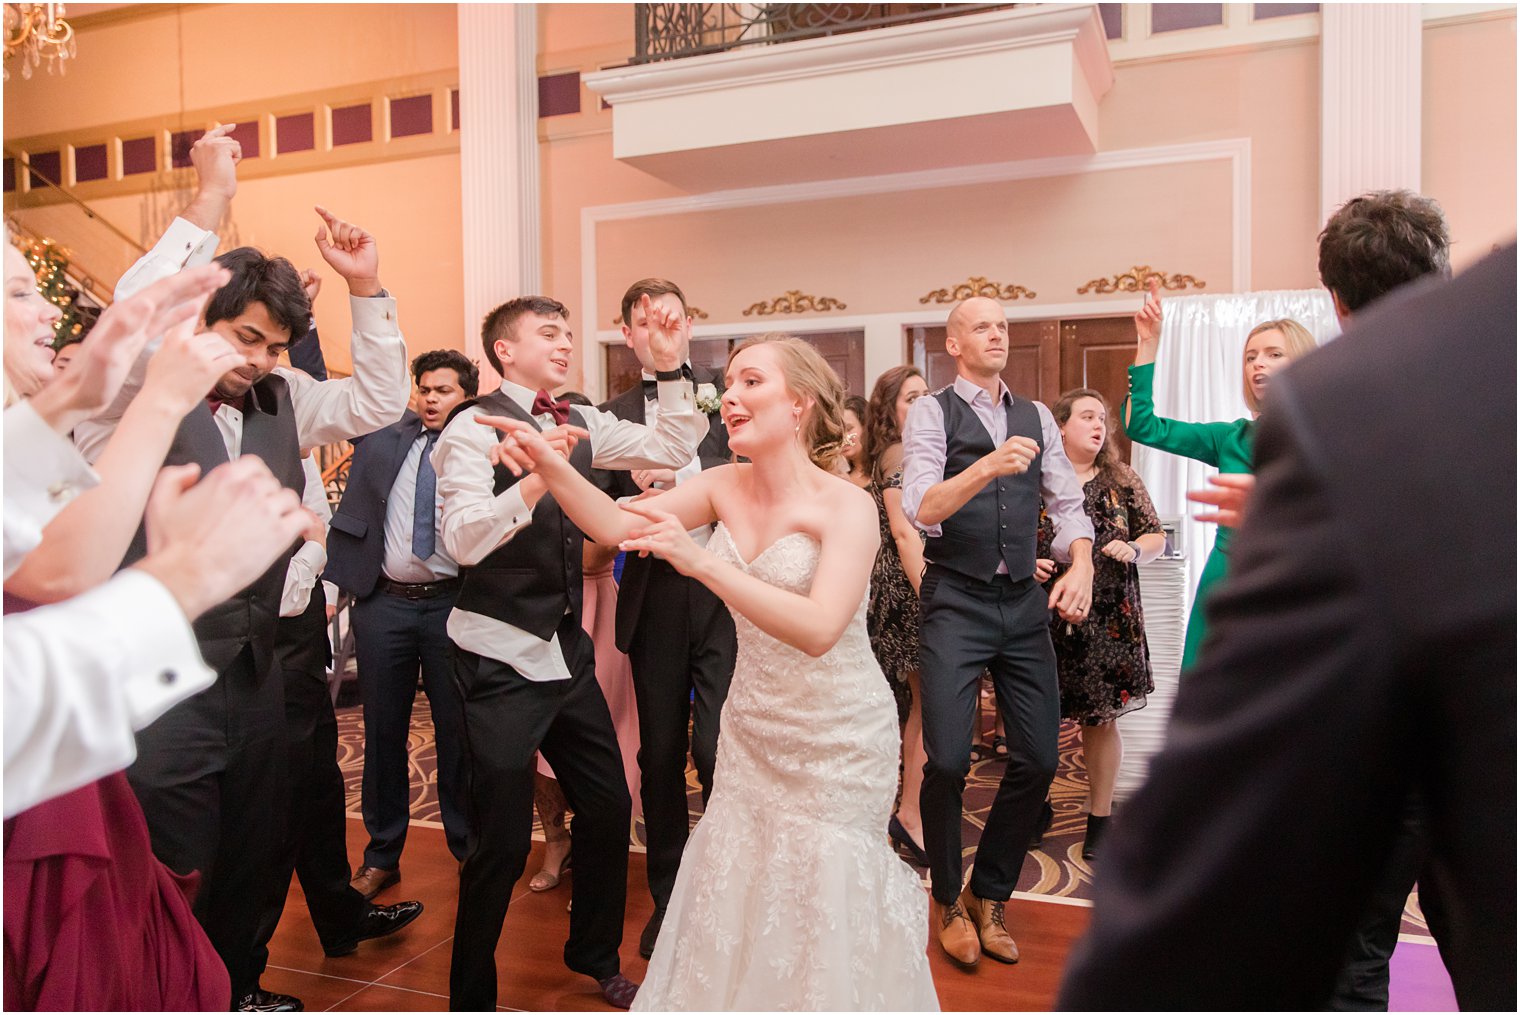 Guests dancing at wedding reception at The Palace at Somerset Park in Somerset NJ